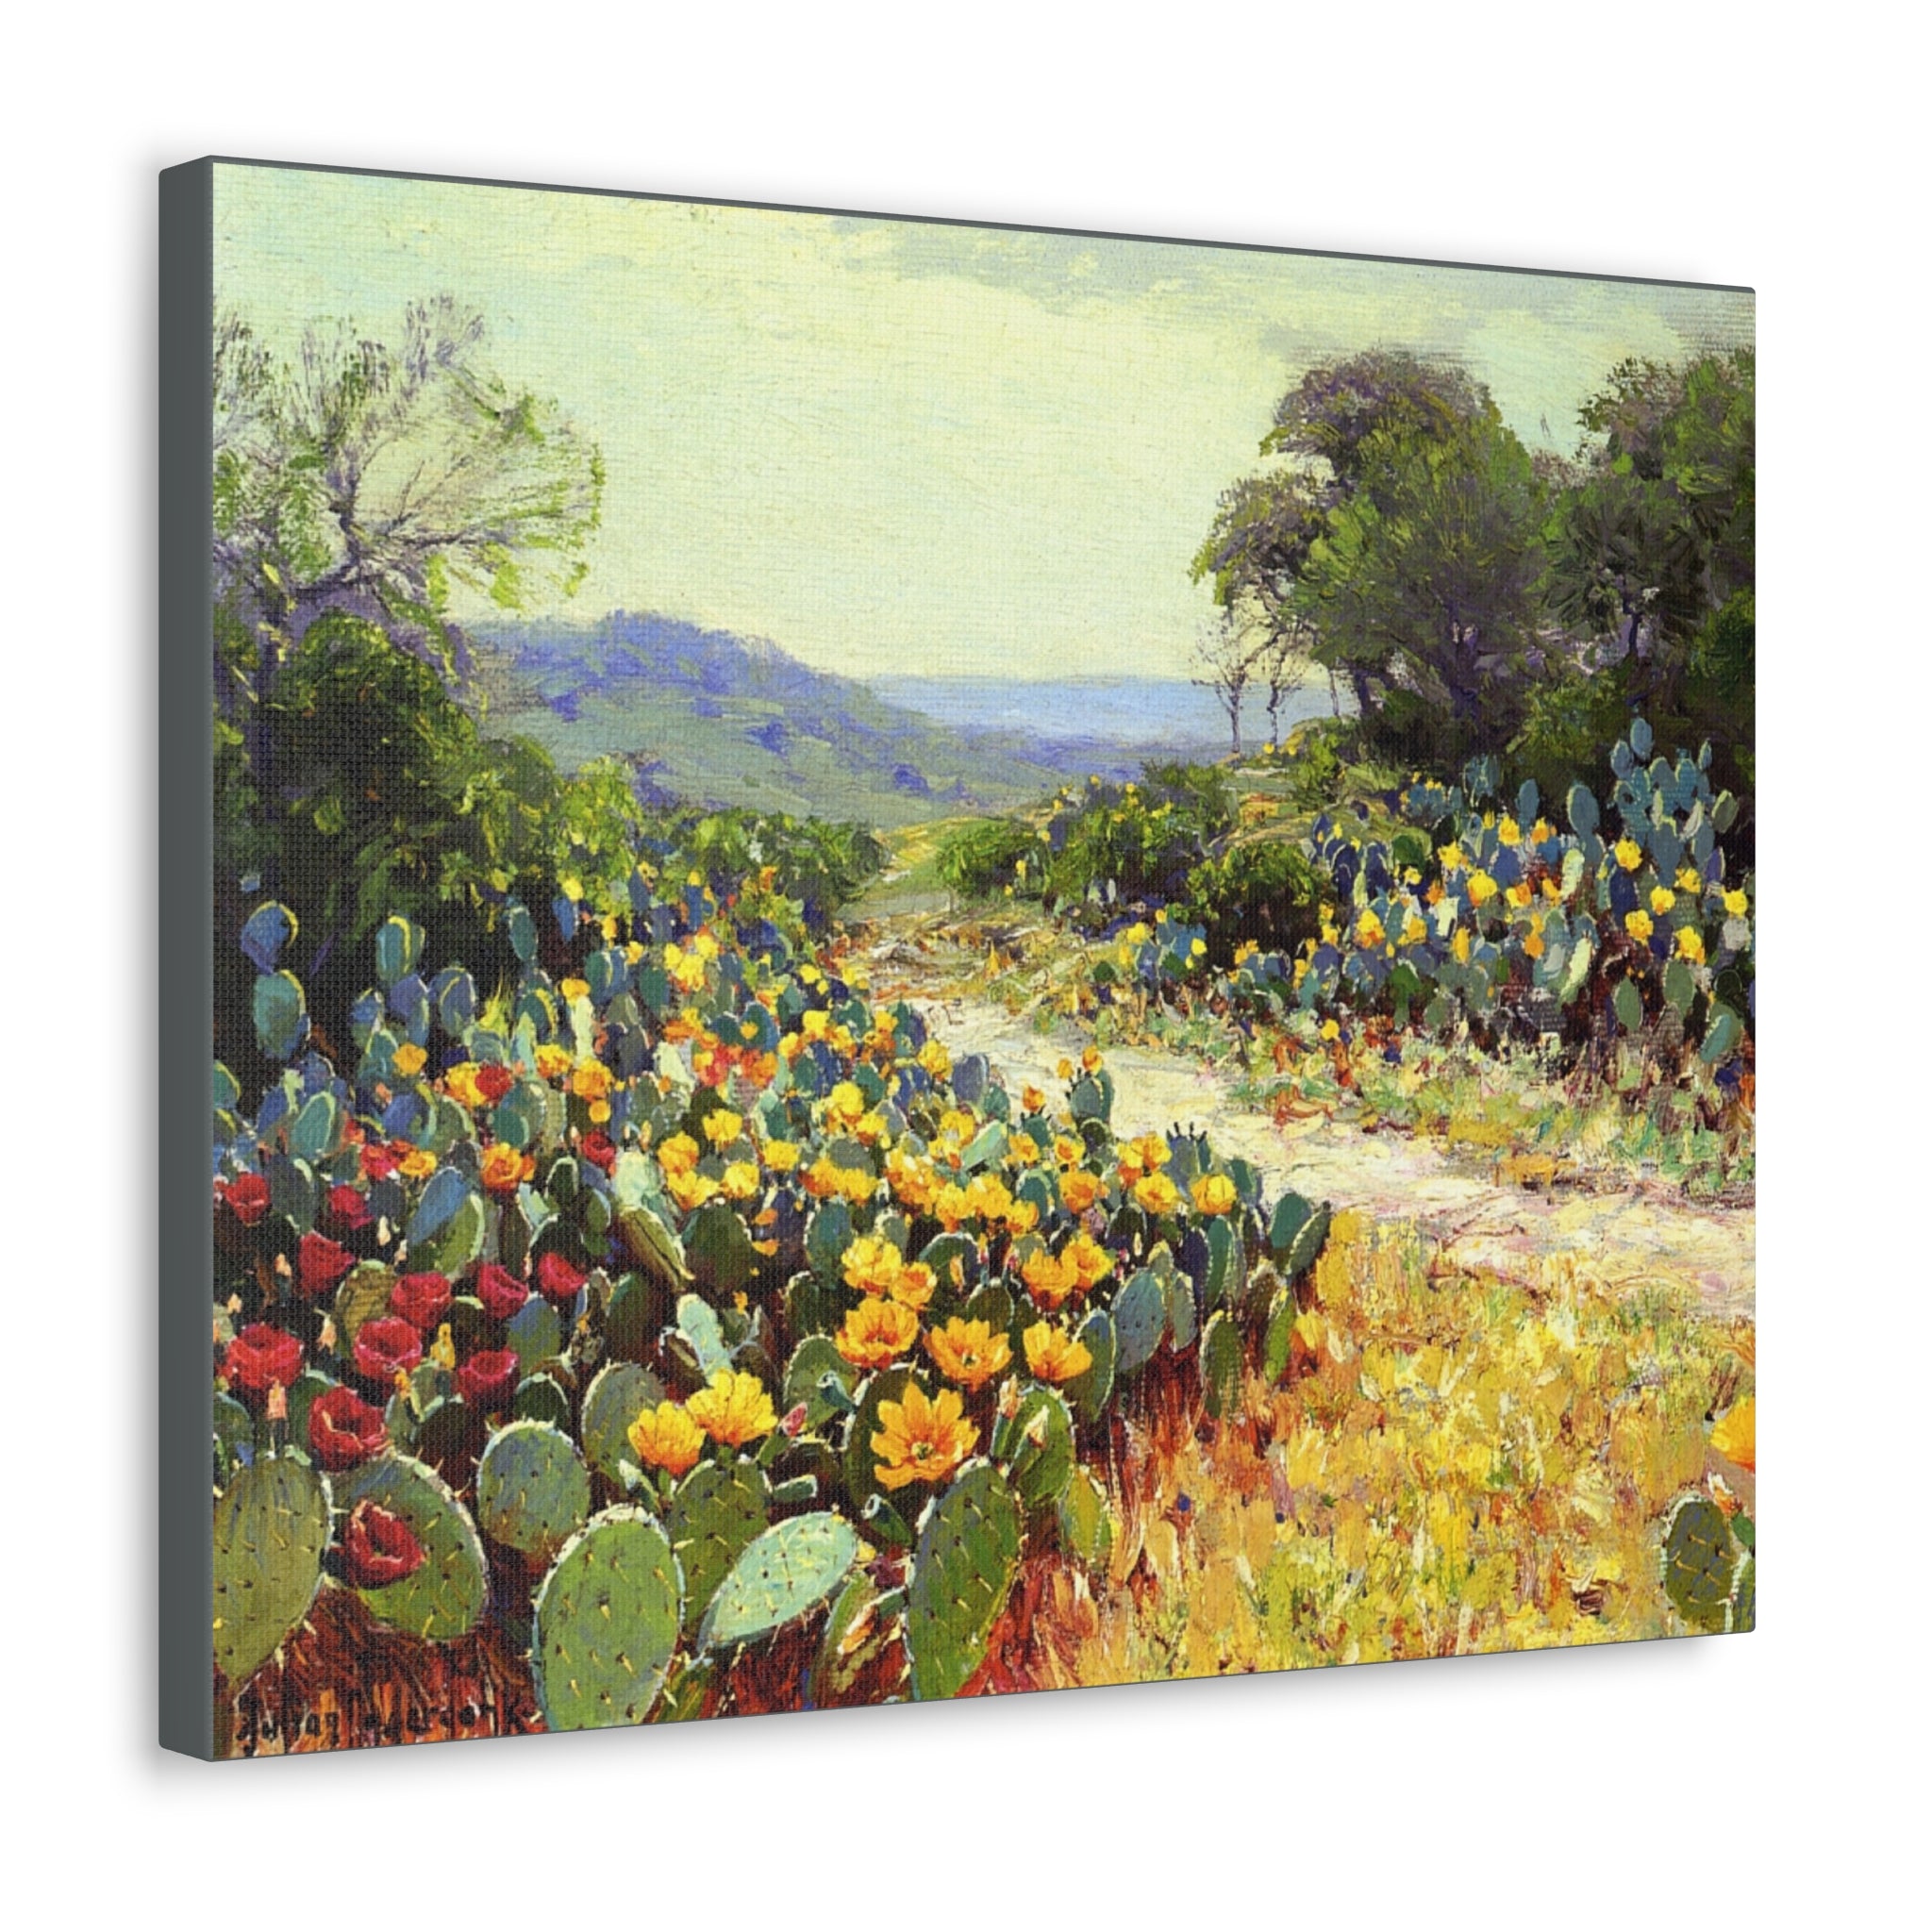 Cactus in Bloom - Julian Onderdonk - Canvas Gallery Wraps